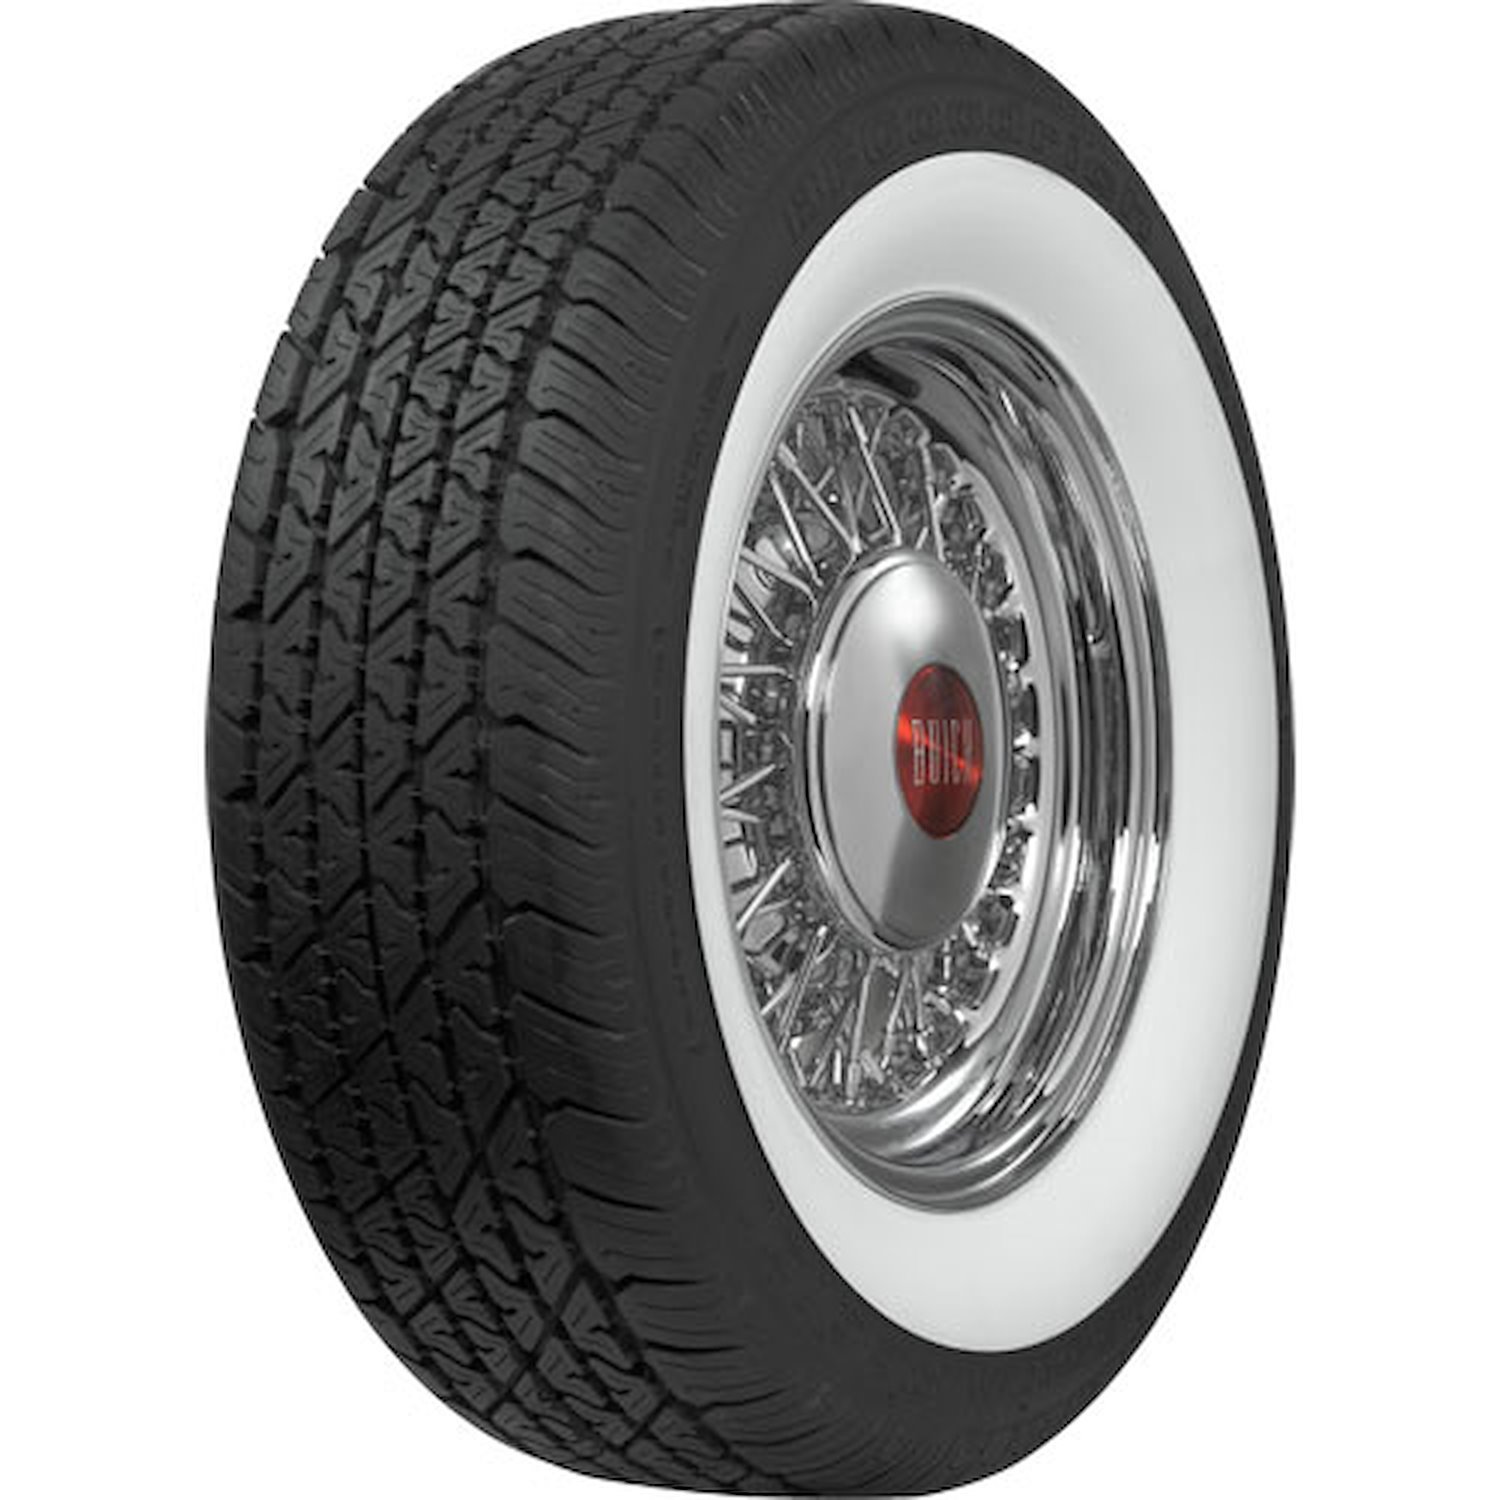 BF Goodrich Silvertown Whitewall Radial Tire P235/70R15